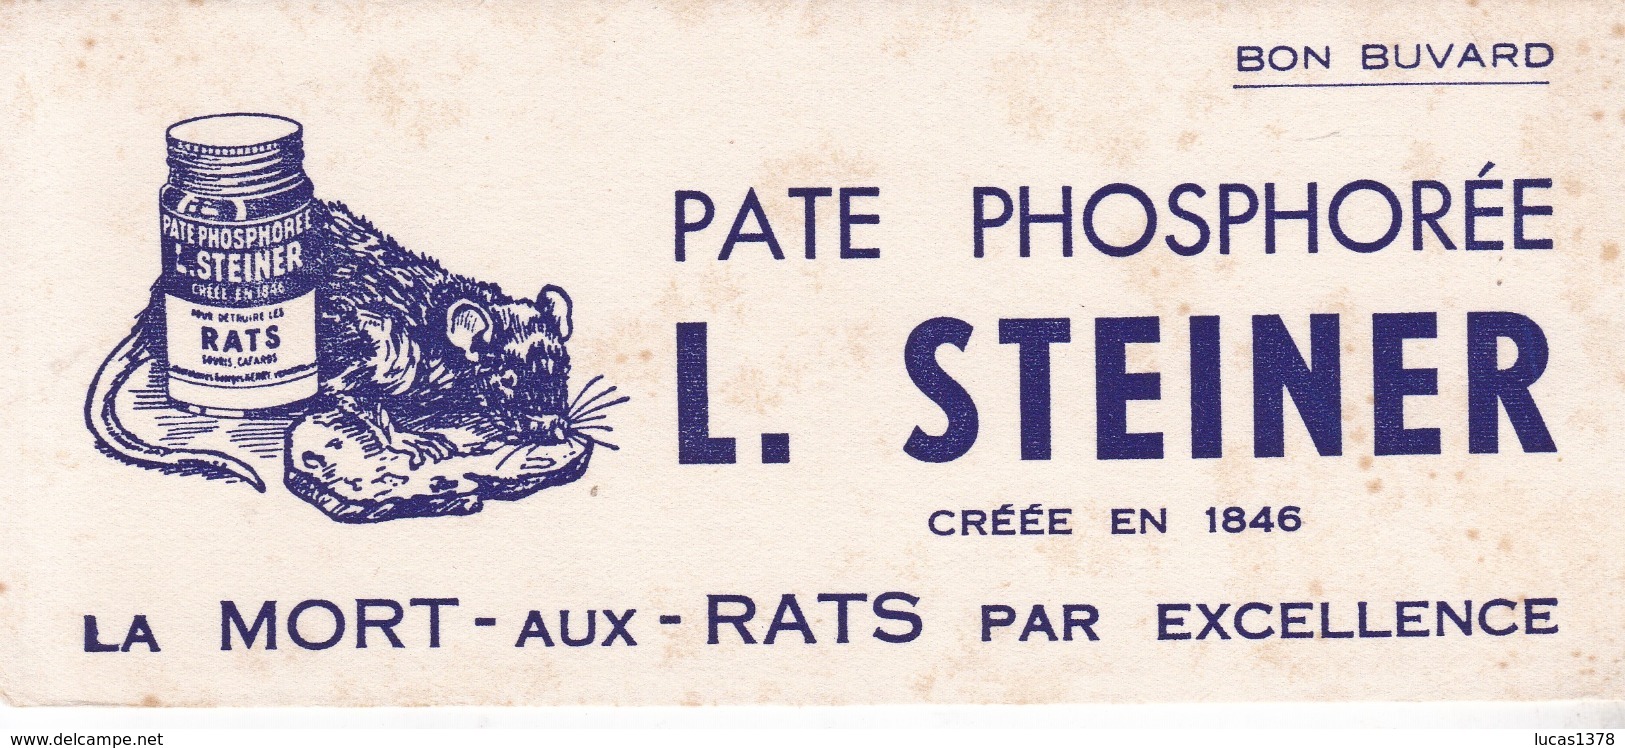 PATE PHOSPHOREE STEINER / MORT AUX RATS - Limpieza